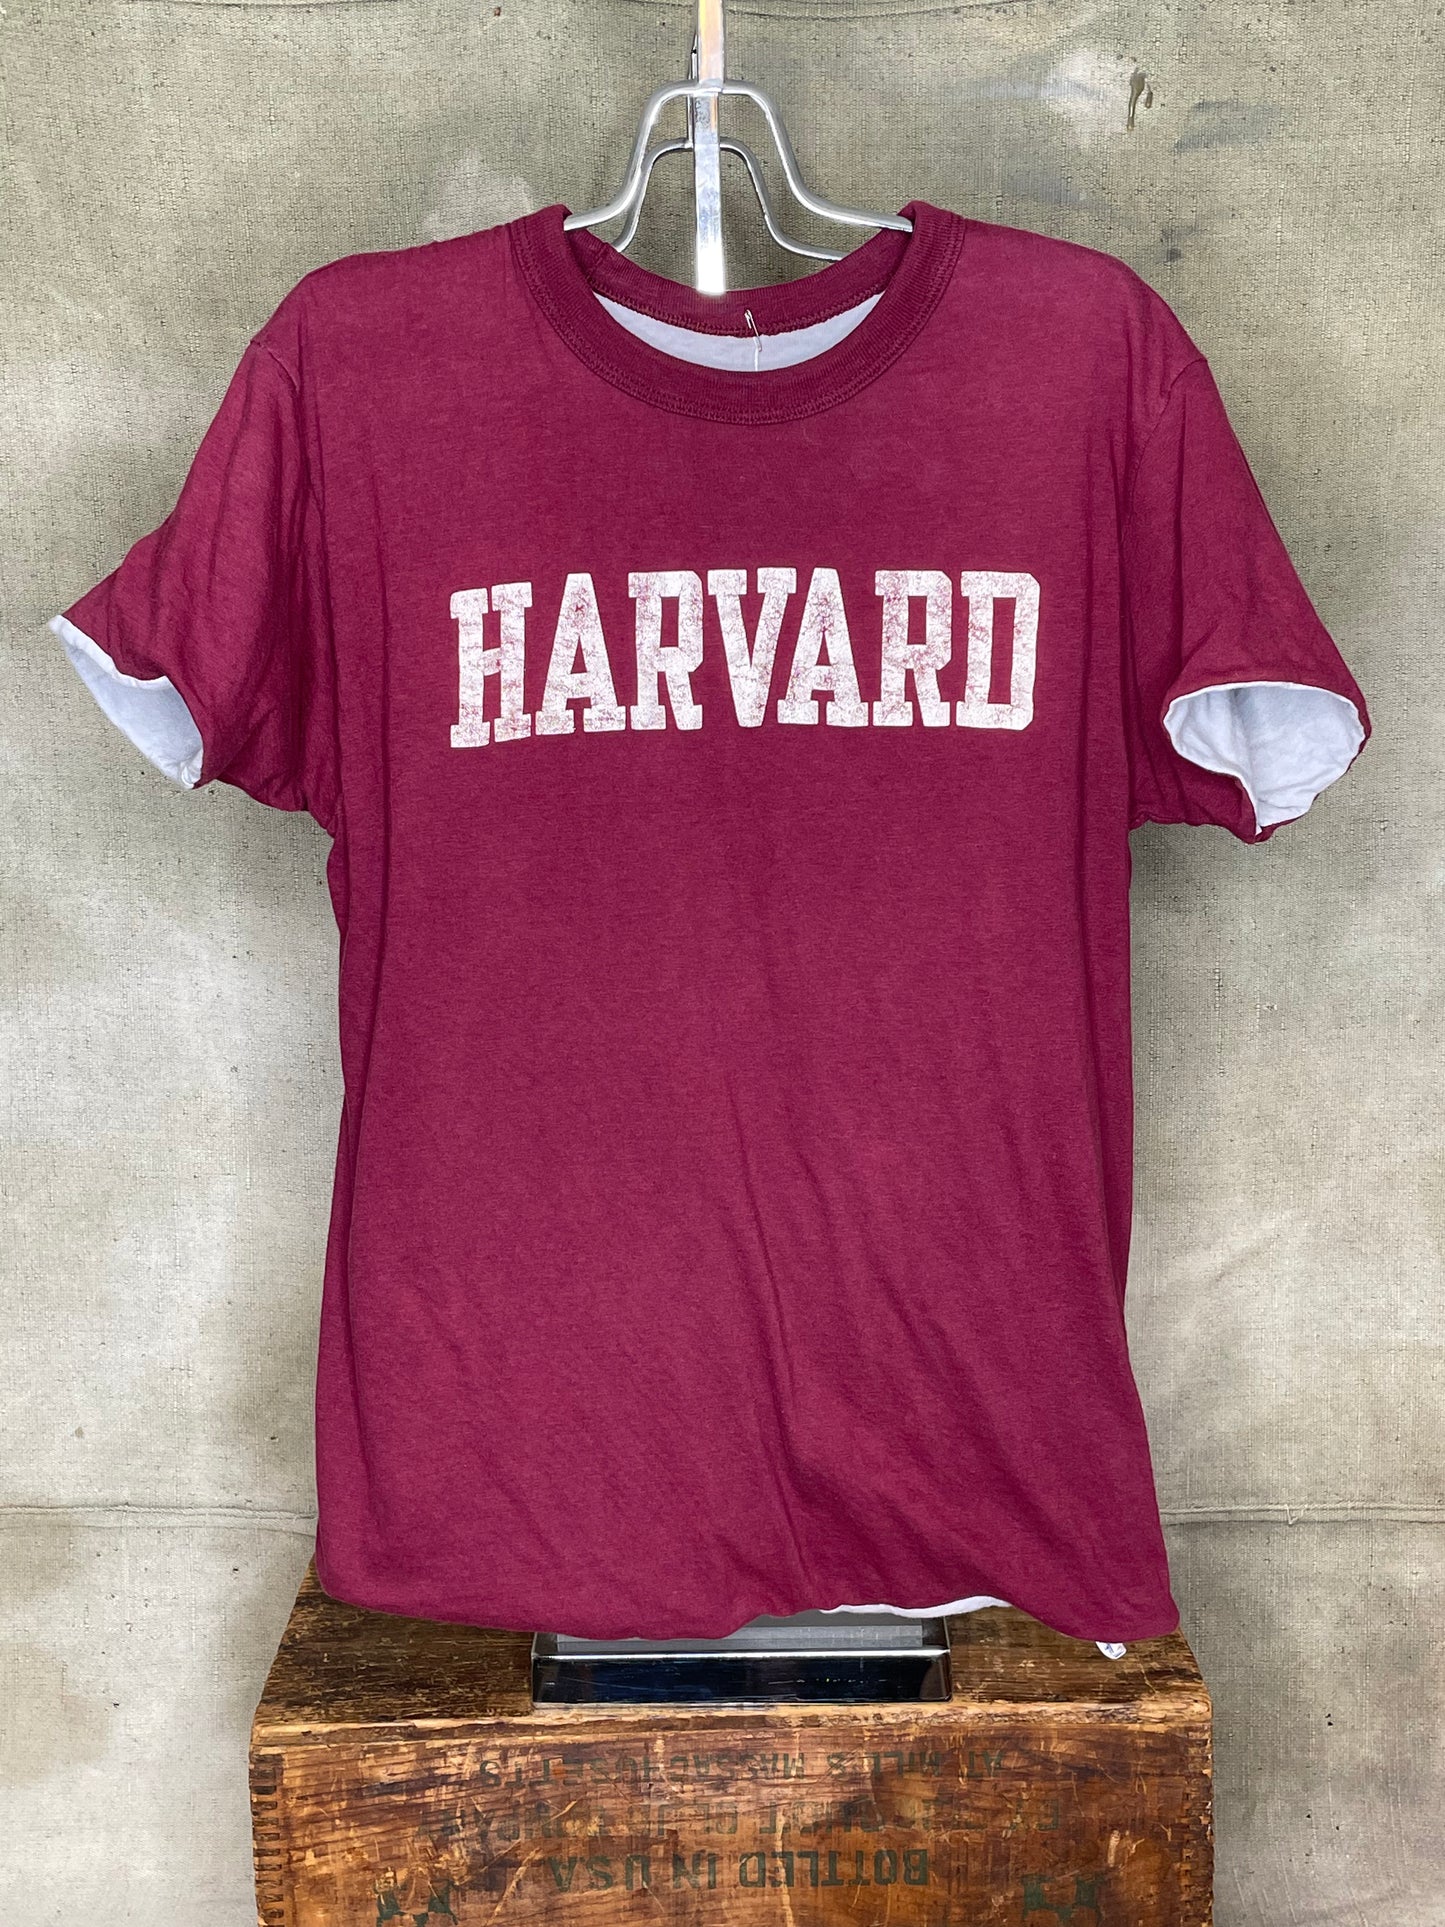 Vintage S Harvard University Reversible Champion Shirt